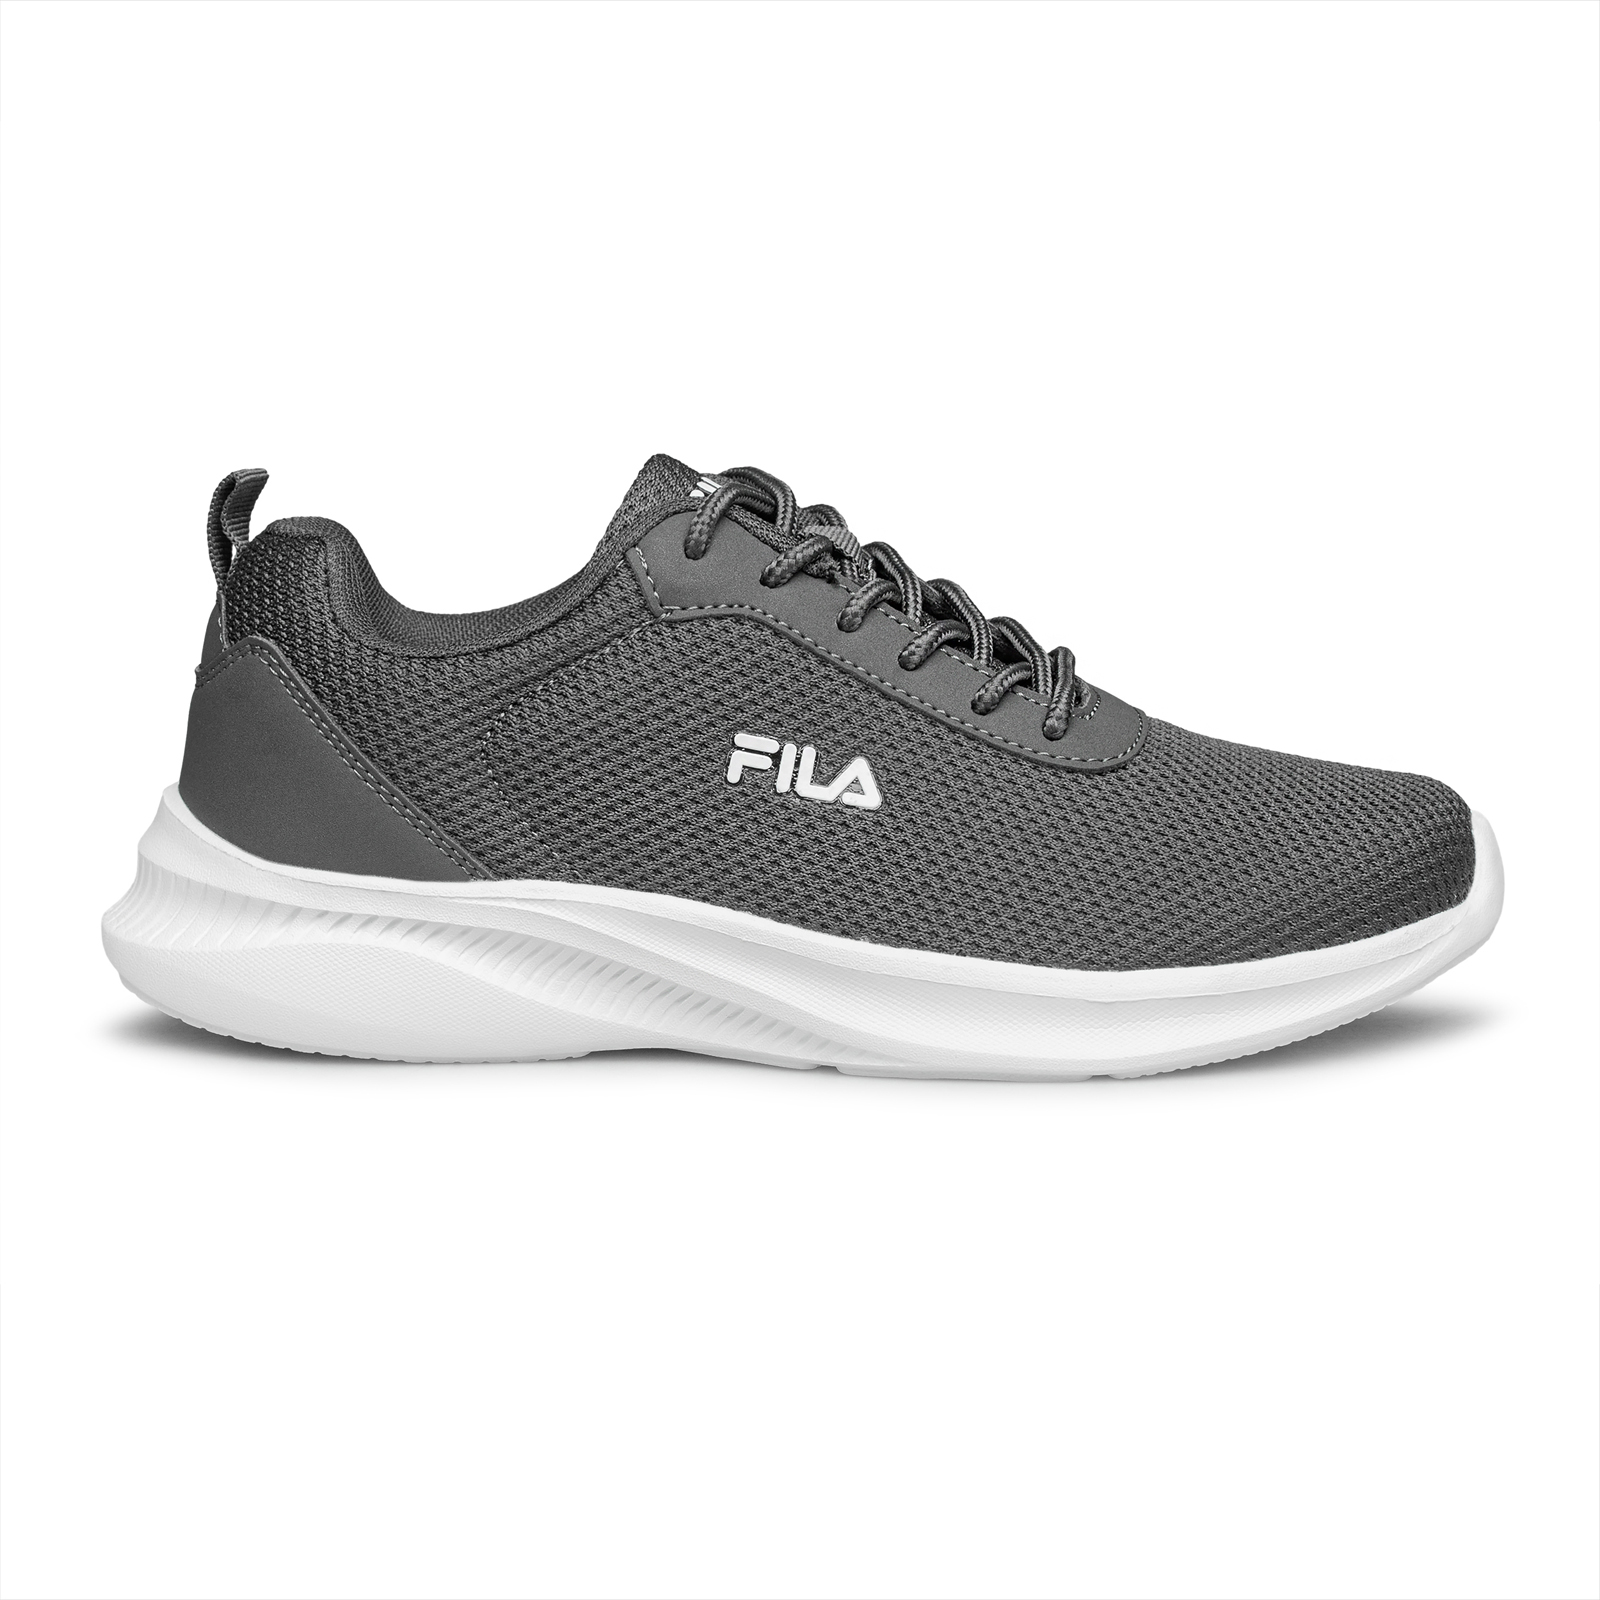 Fila - DORADO 2 LACE FOOTWEAR - ANTHRACITE WHITE Παιδικά > Παπούτσια > Αθλητικά > Παπούτσι Low Cut